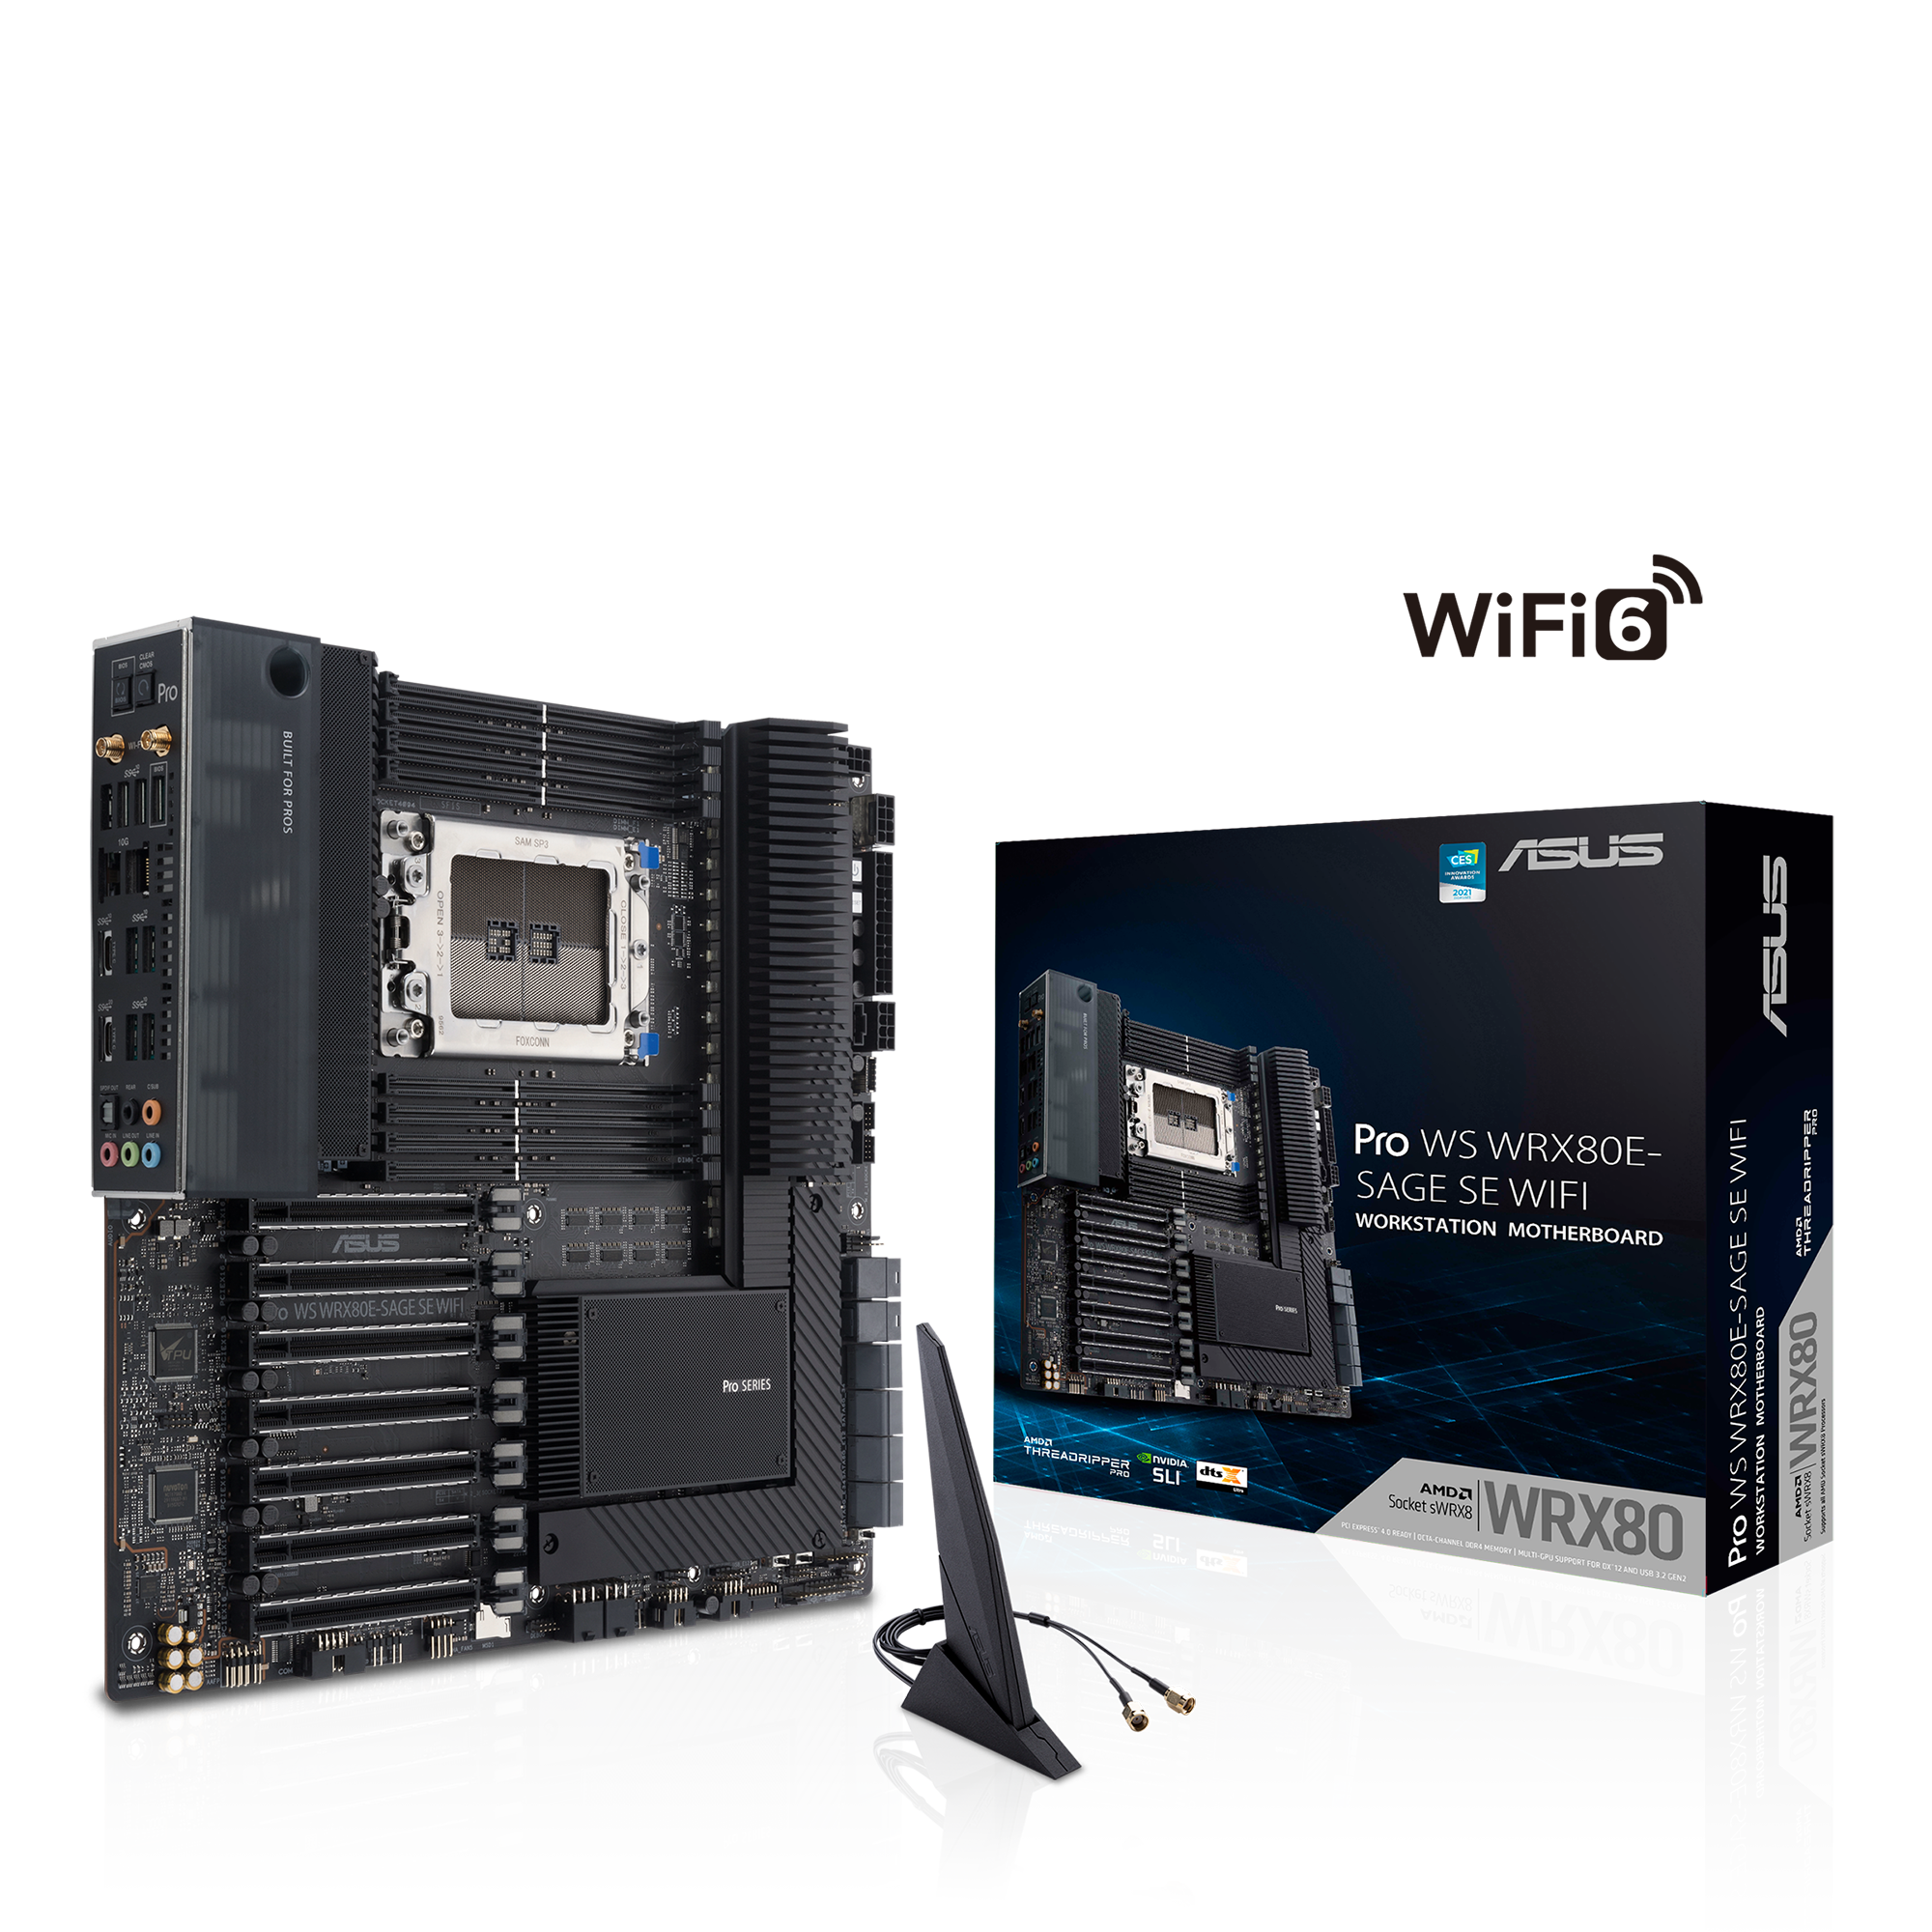 Pro WS WRX80E-SAGE SE WIFI II thumbnail 1